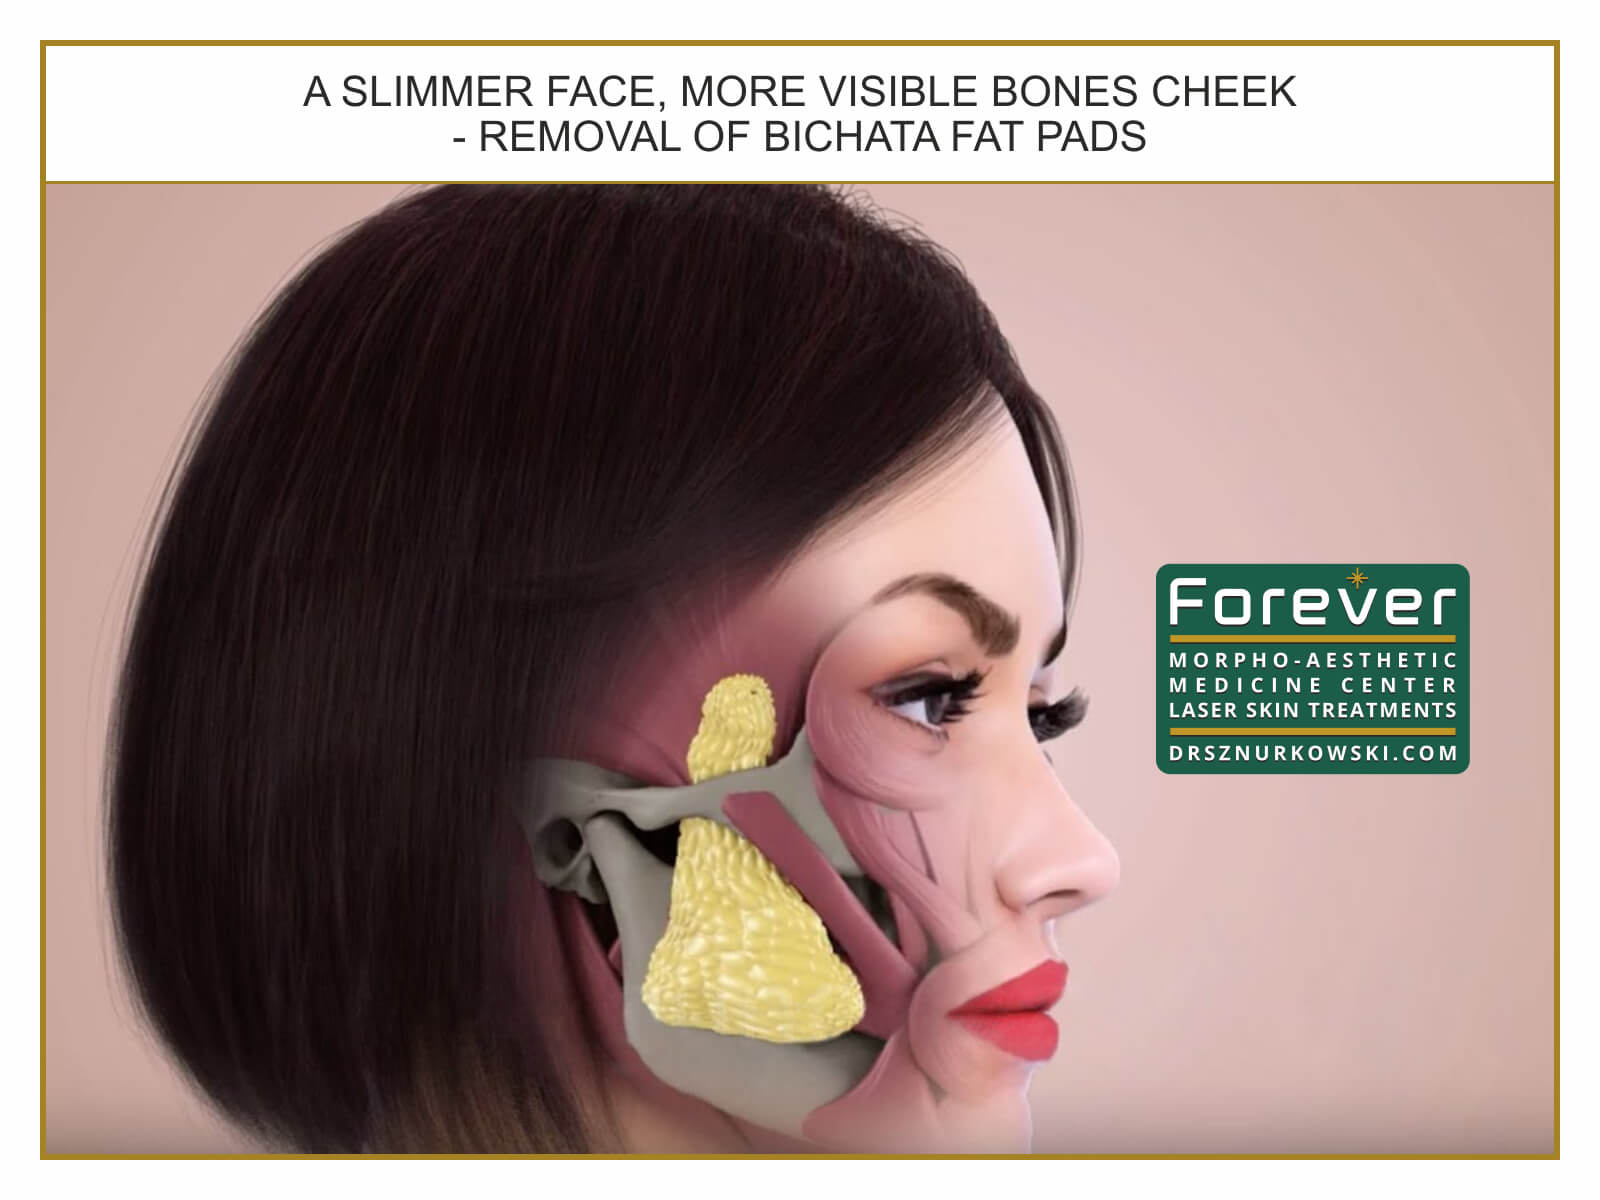 A Slimmer Face, More Visible Bones Cheek - Removal of Bichata...2 (80x60) EN.jpg